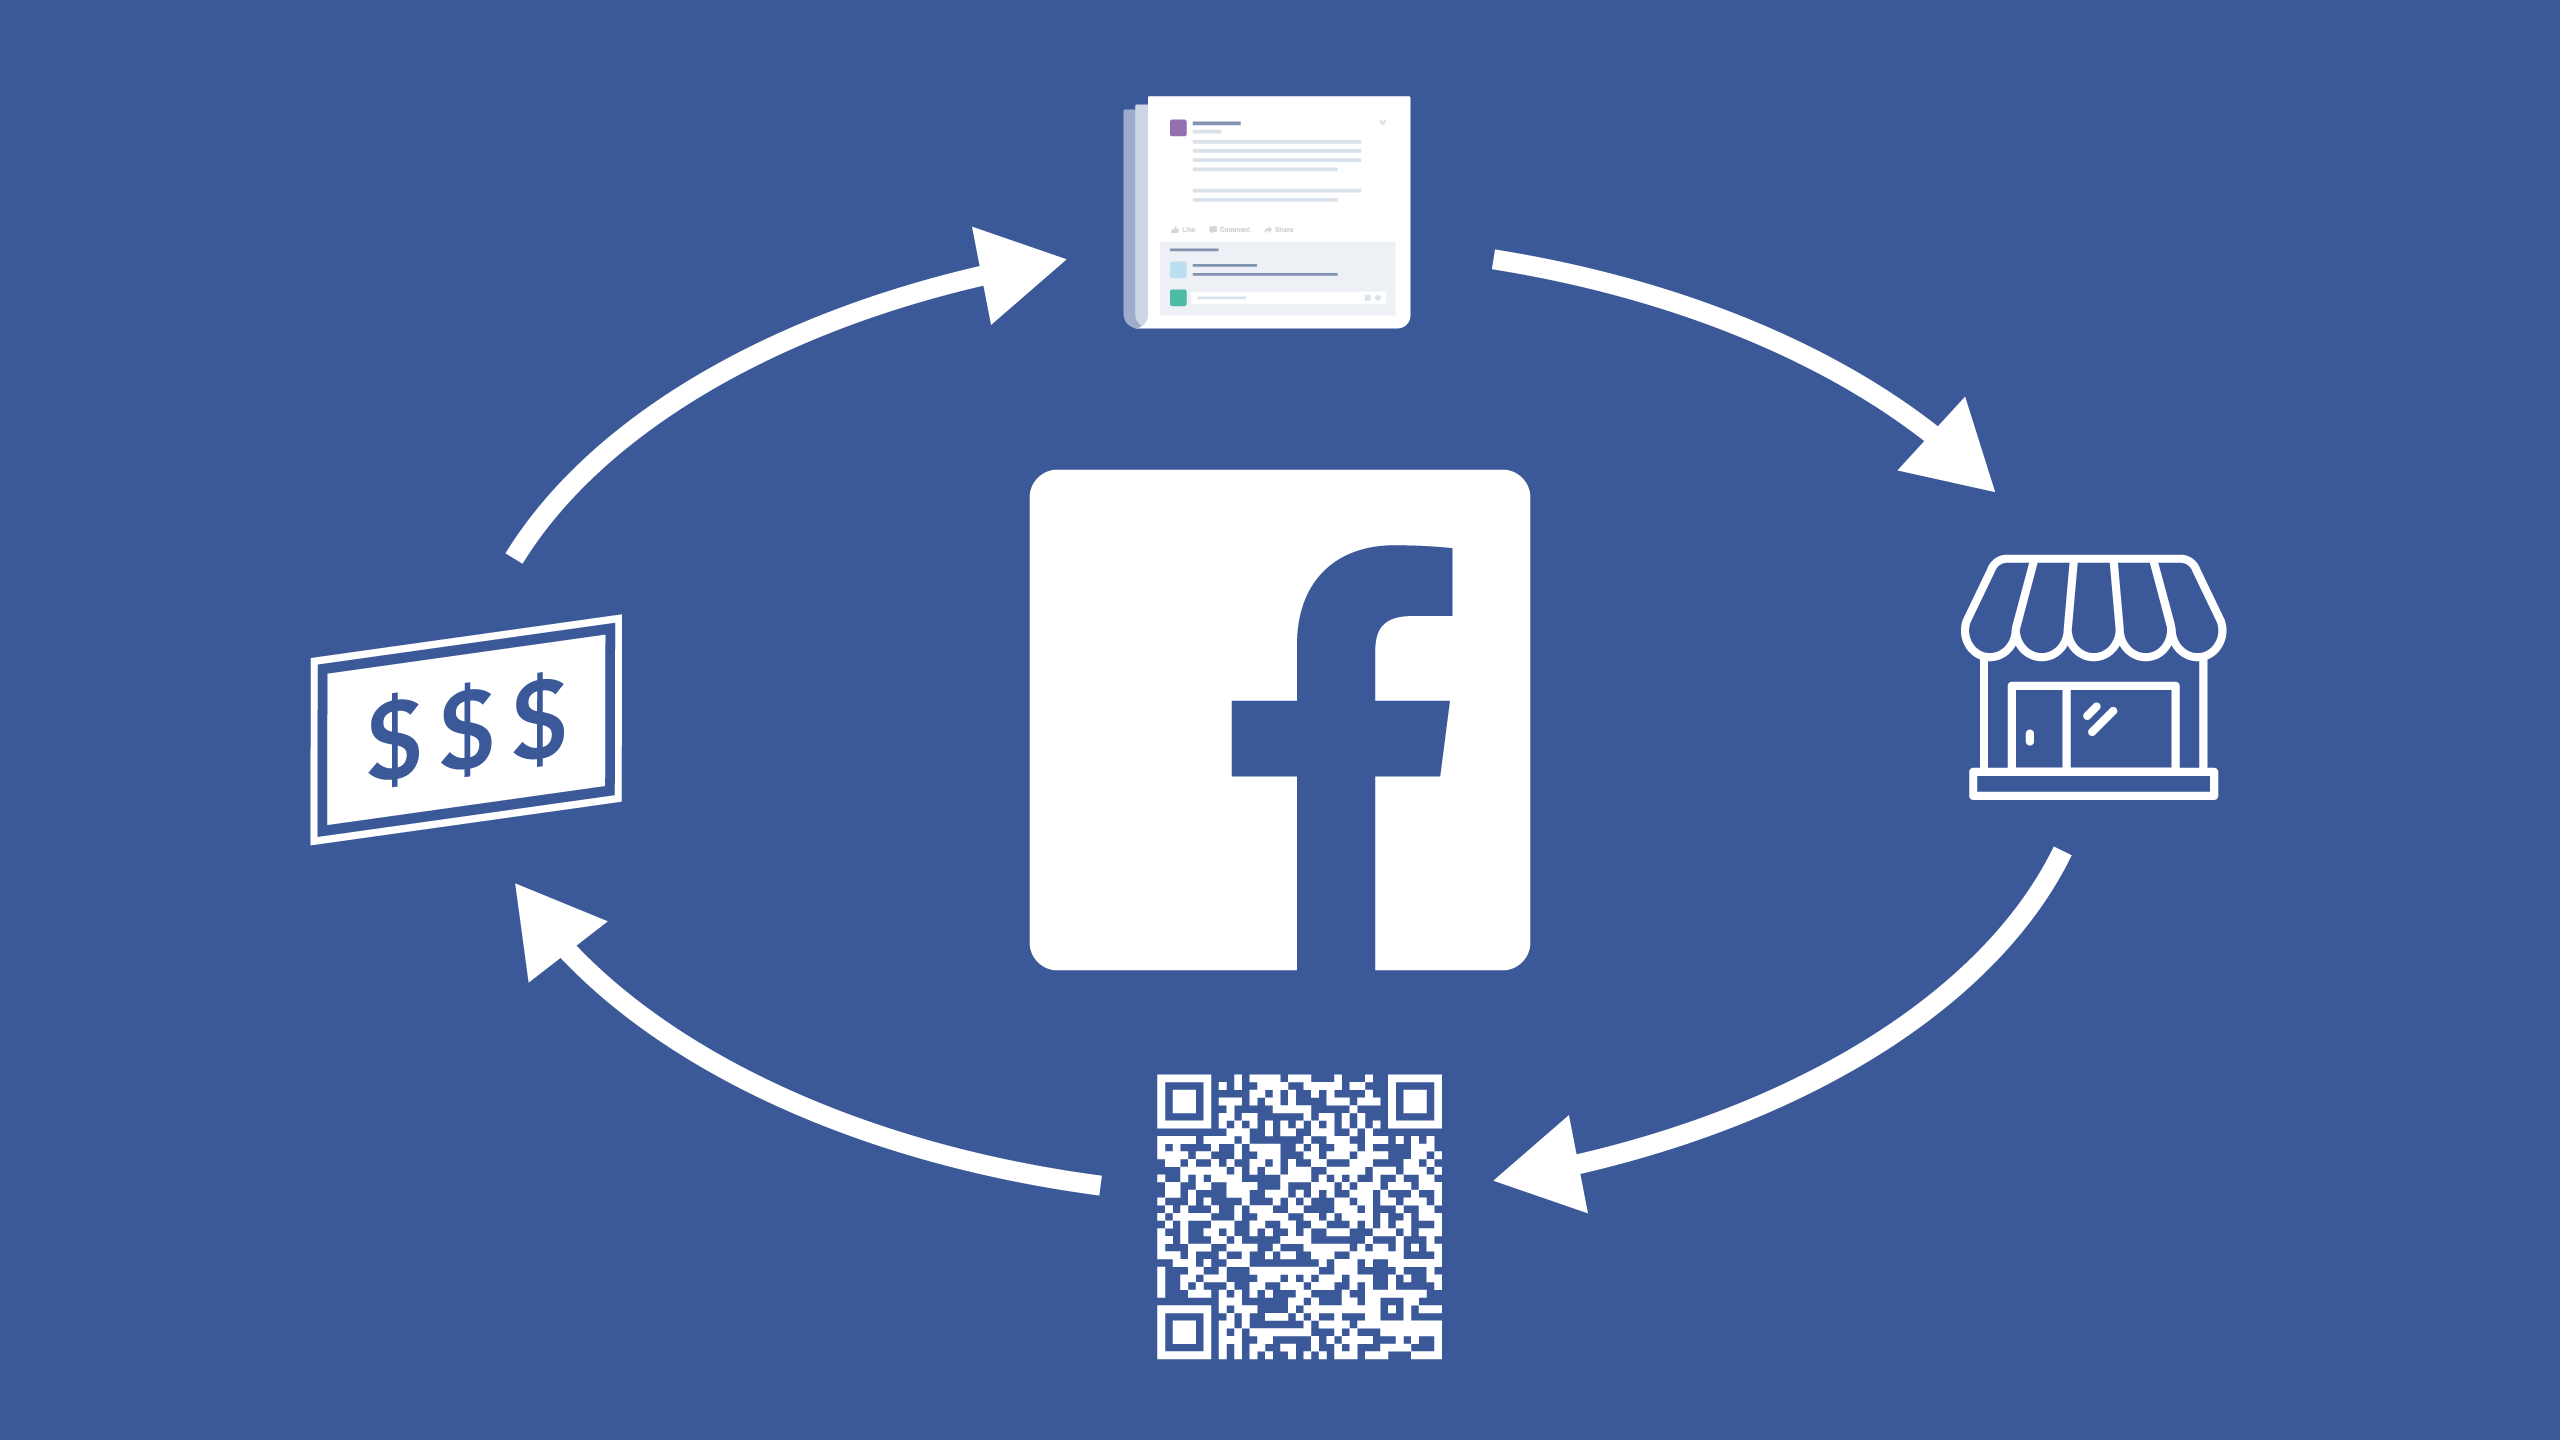 Facebook Seeking To Link Online Efforts To Offline Sales Though QR Code System